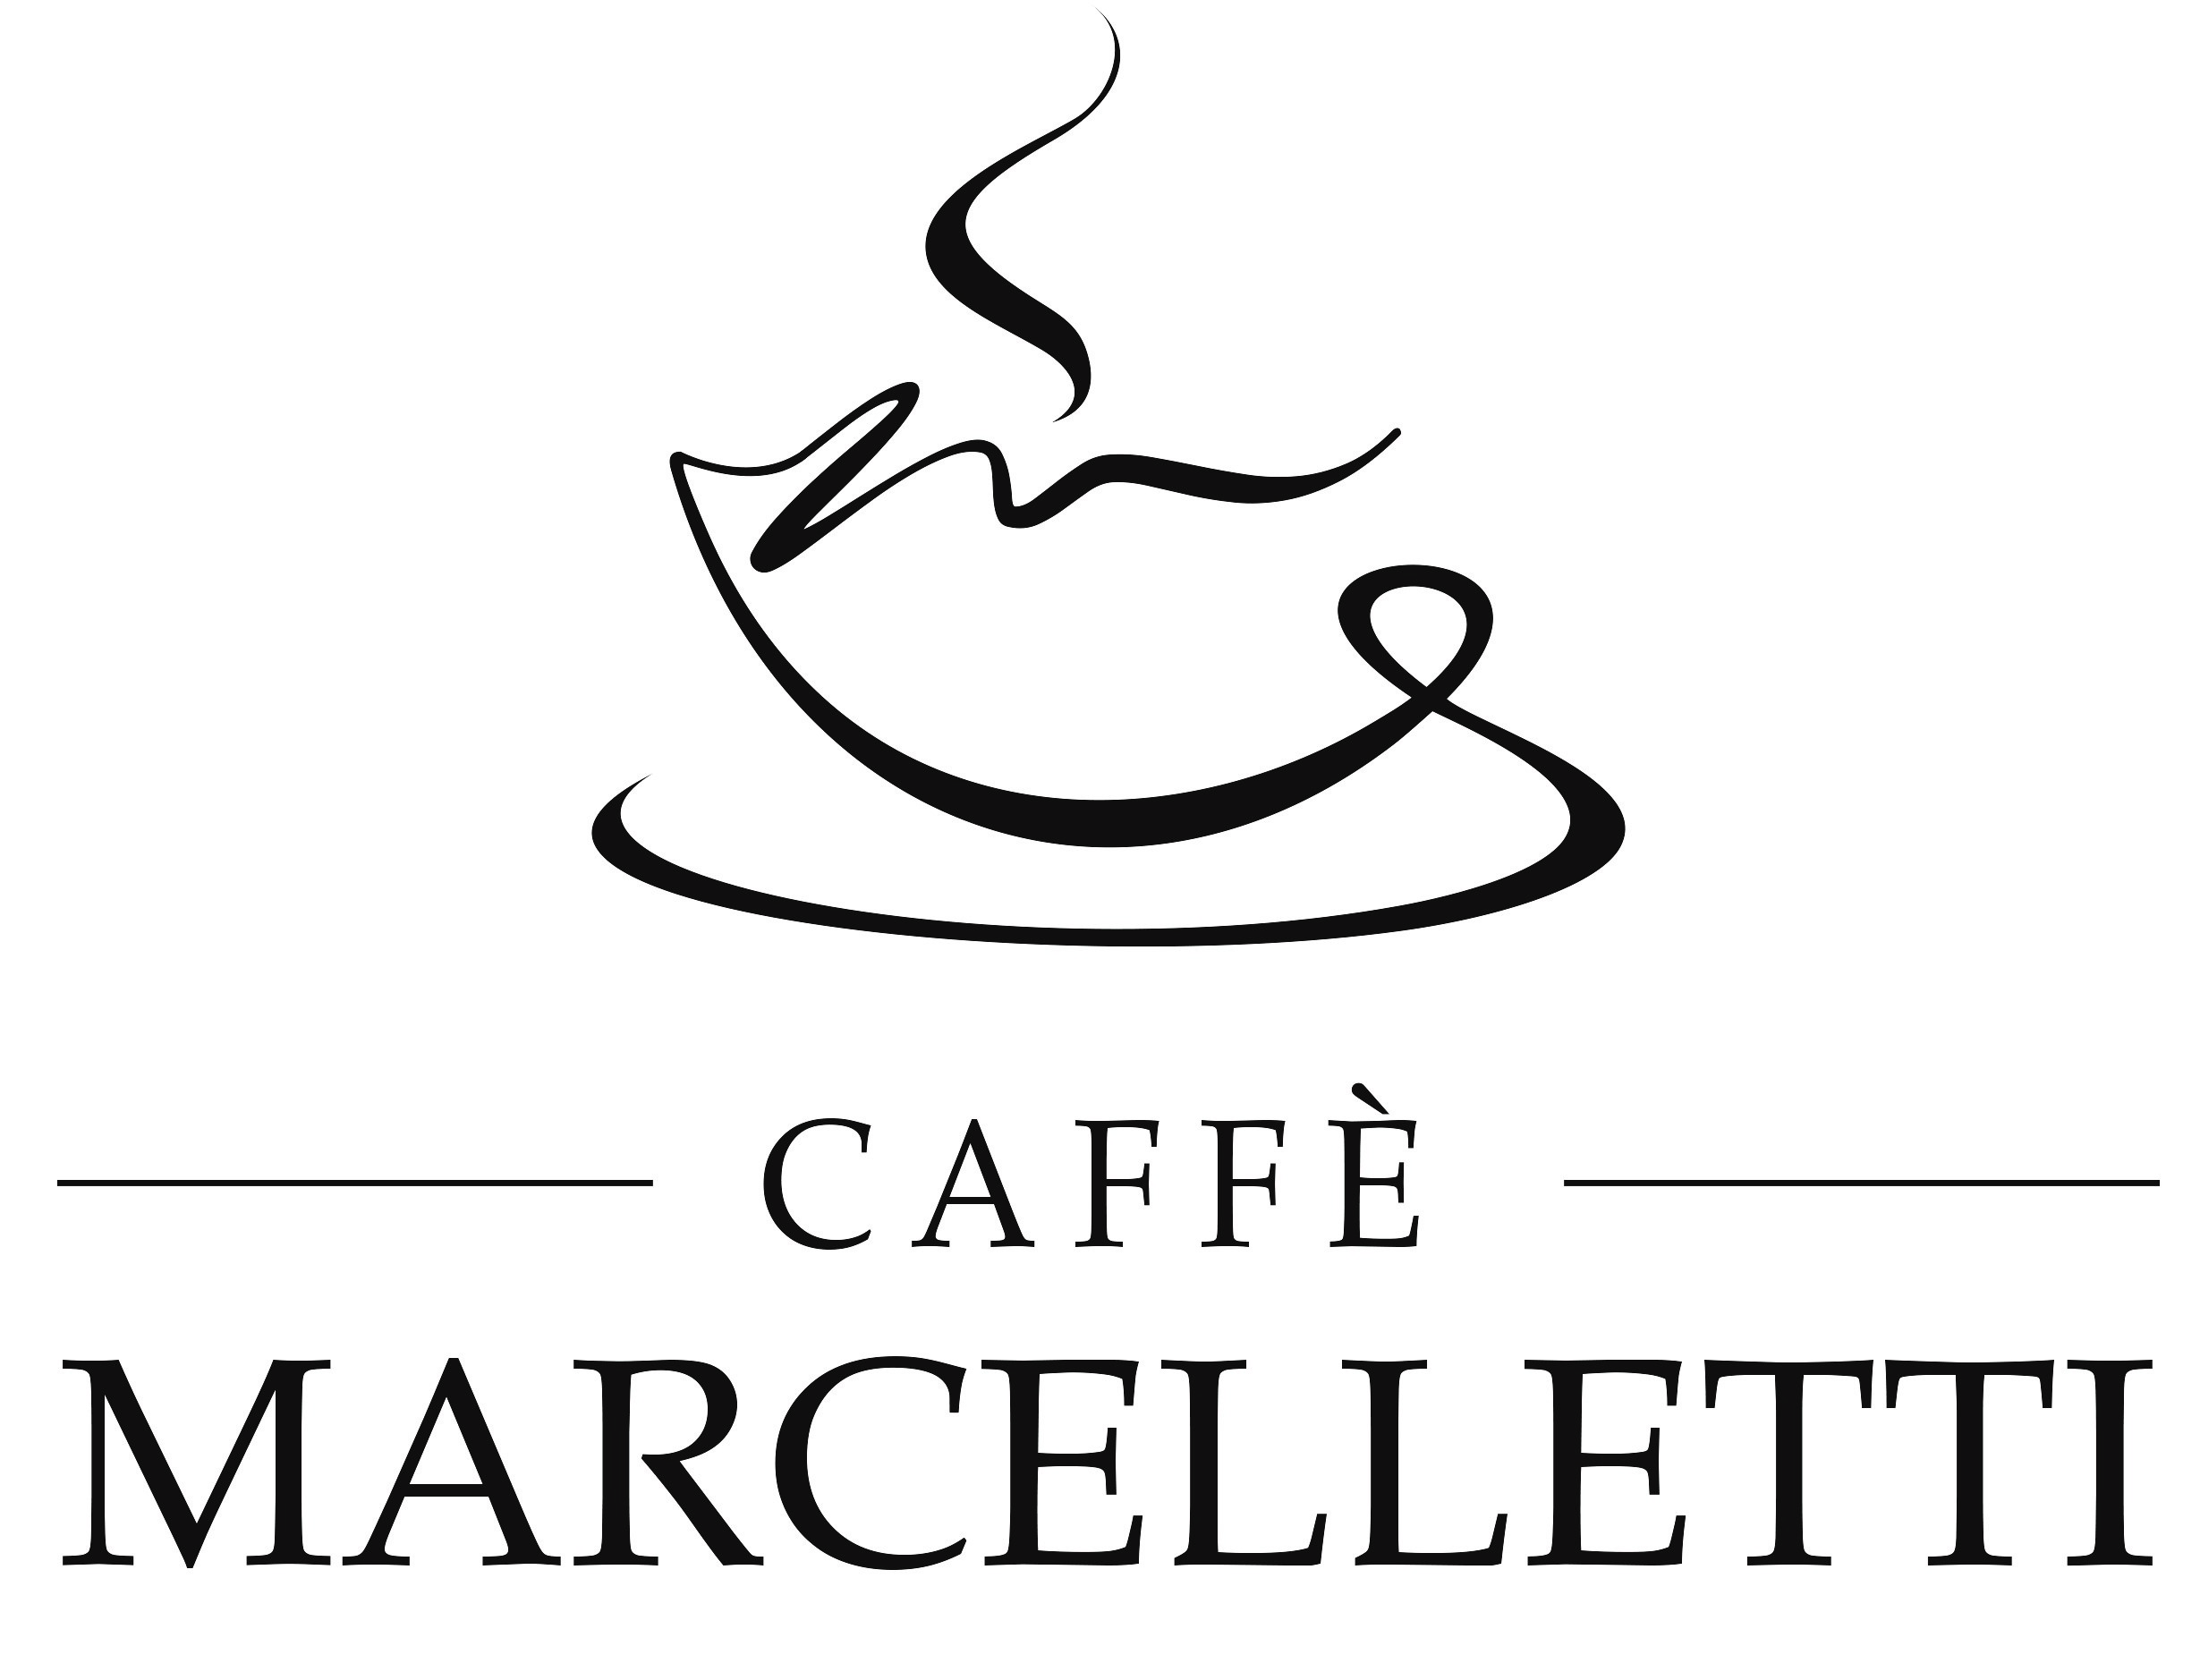 Cafe Marcelletti logo